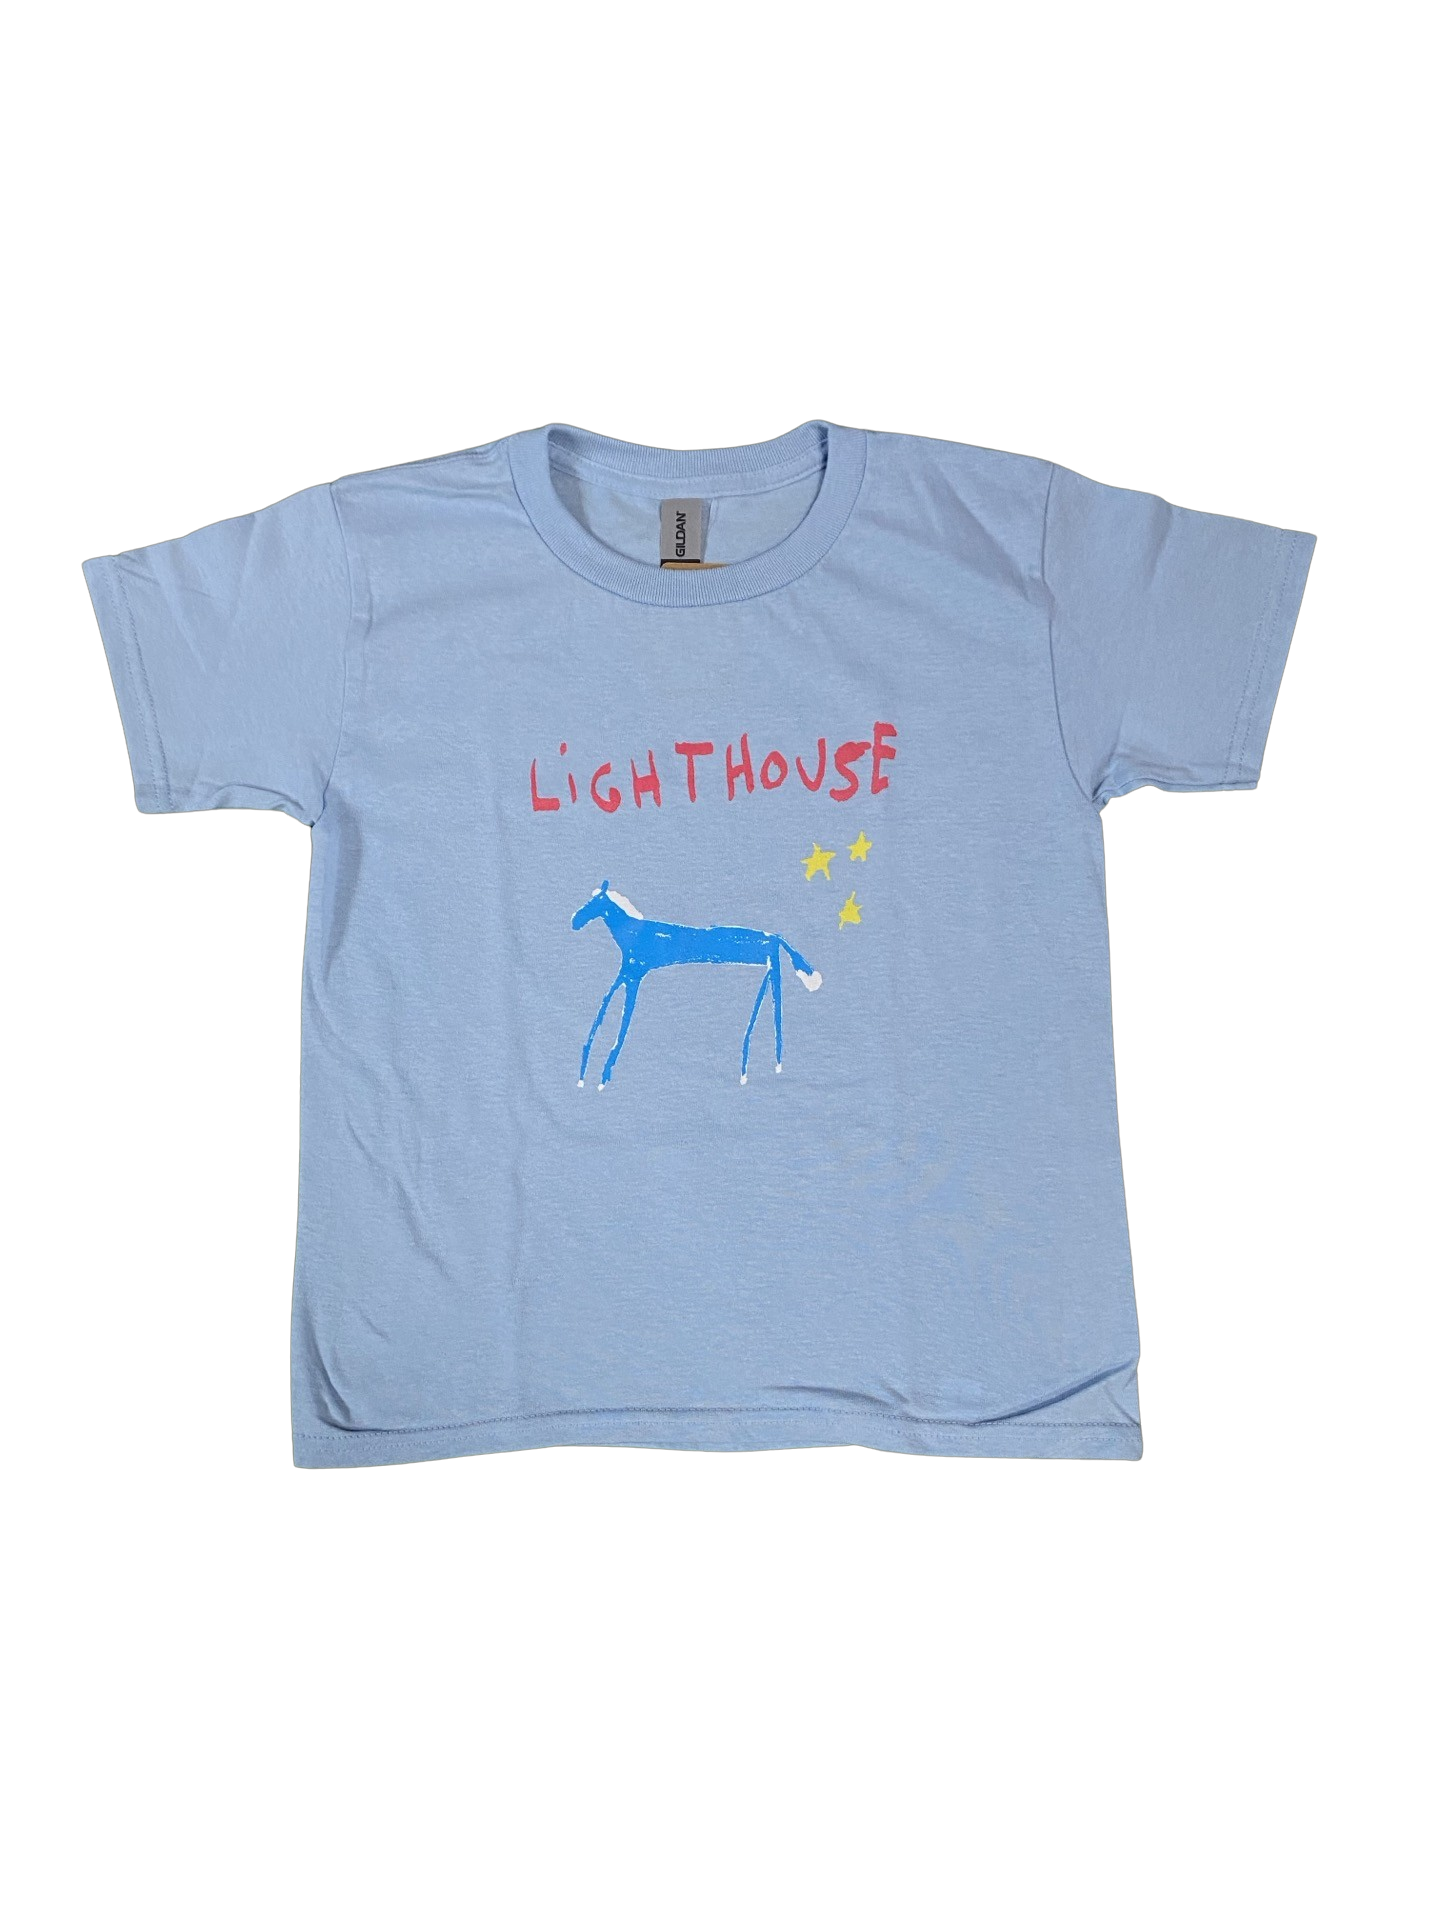 Lighthouse Horsie Youth Shirt